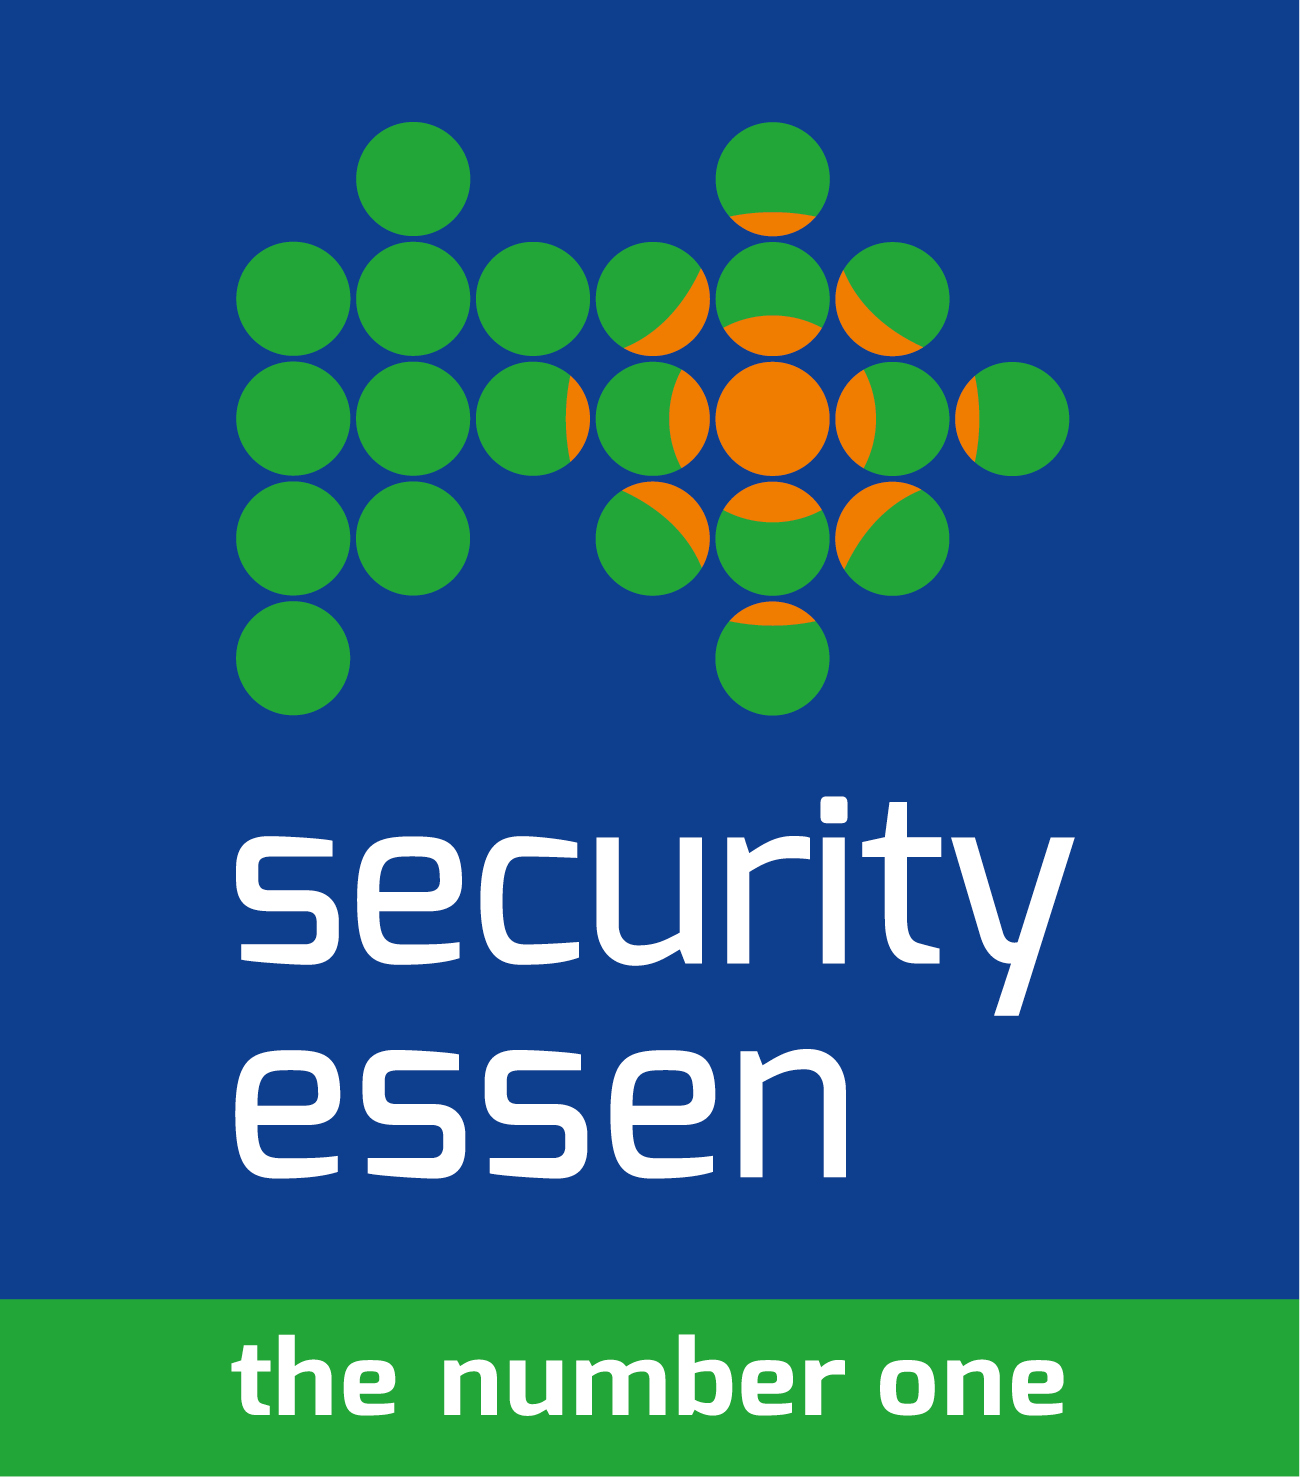 security essen Logo with claim